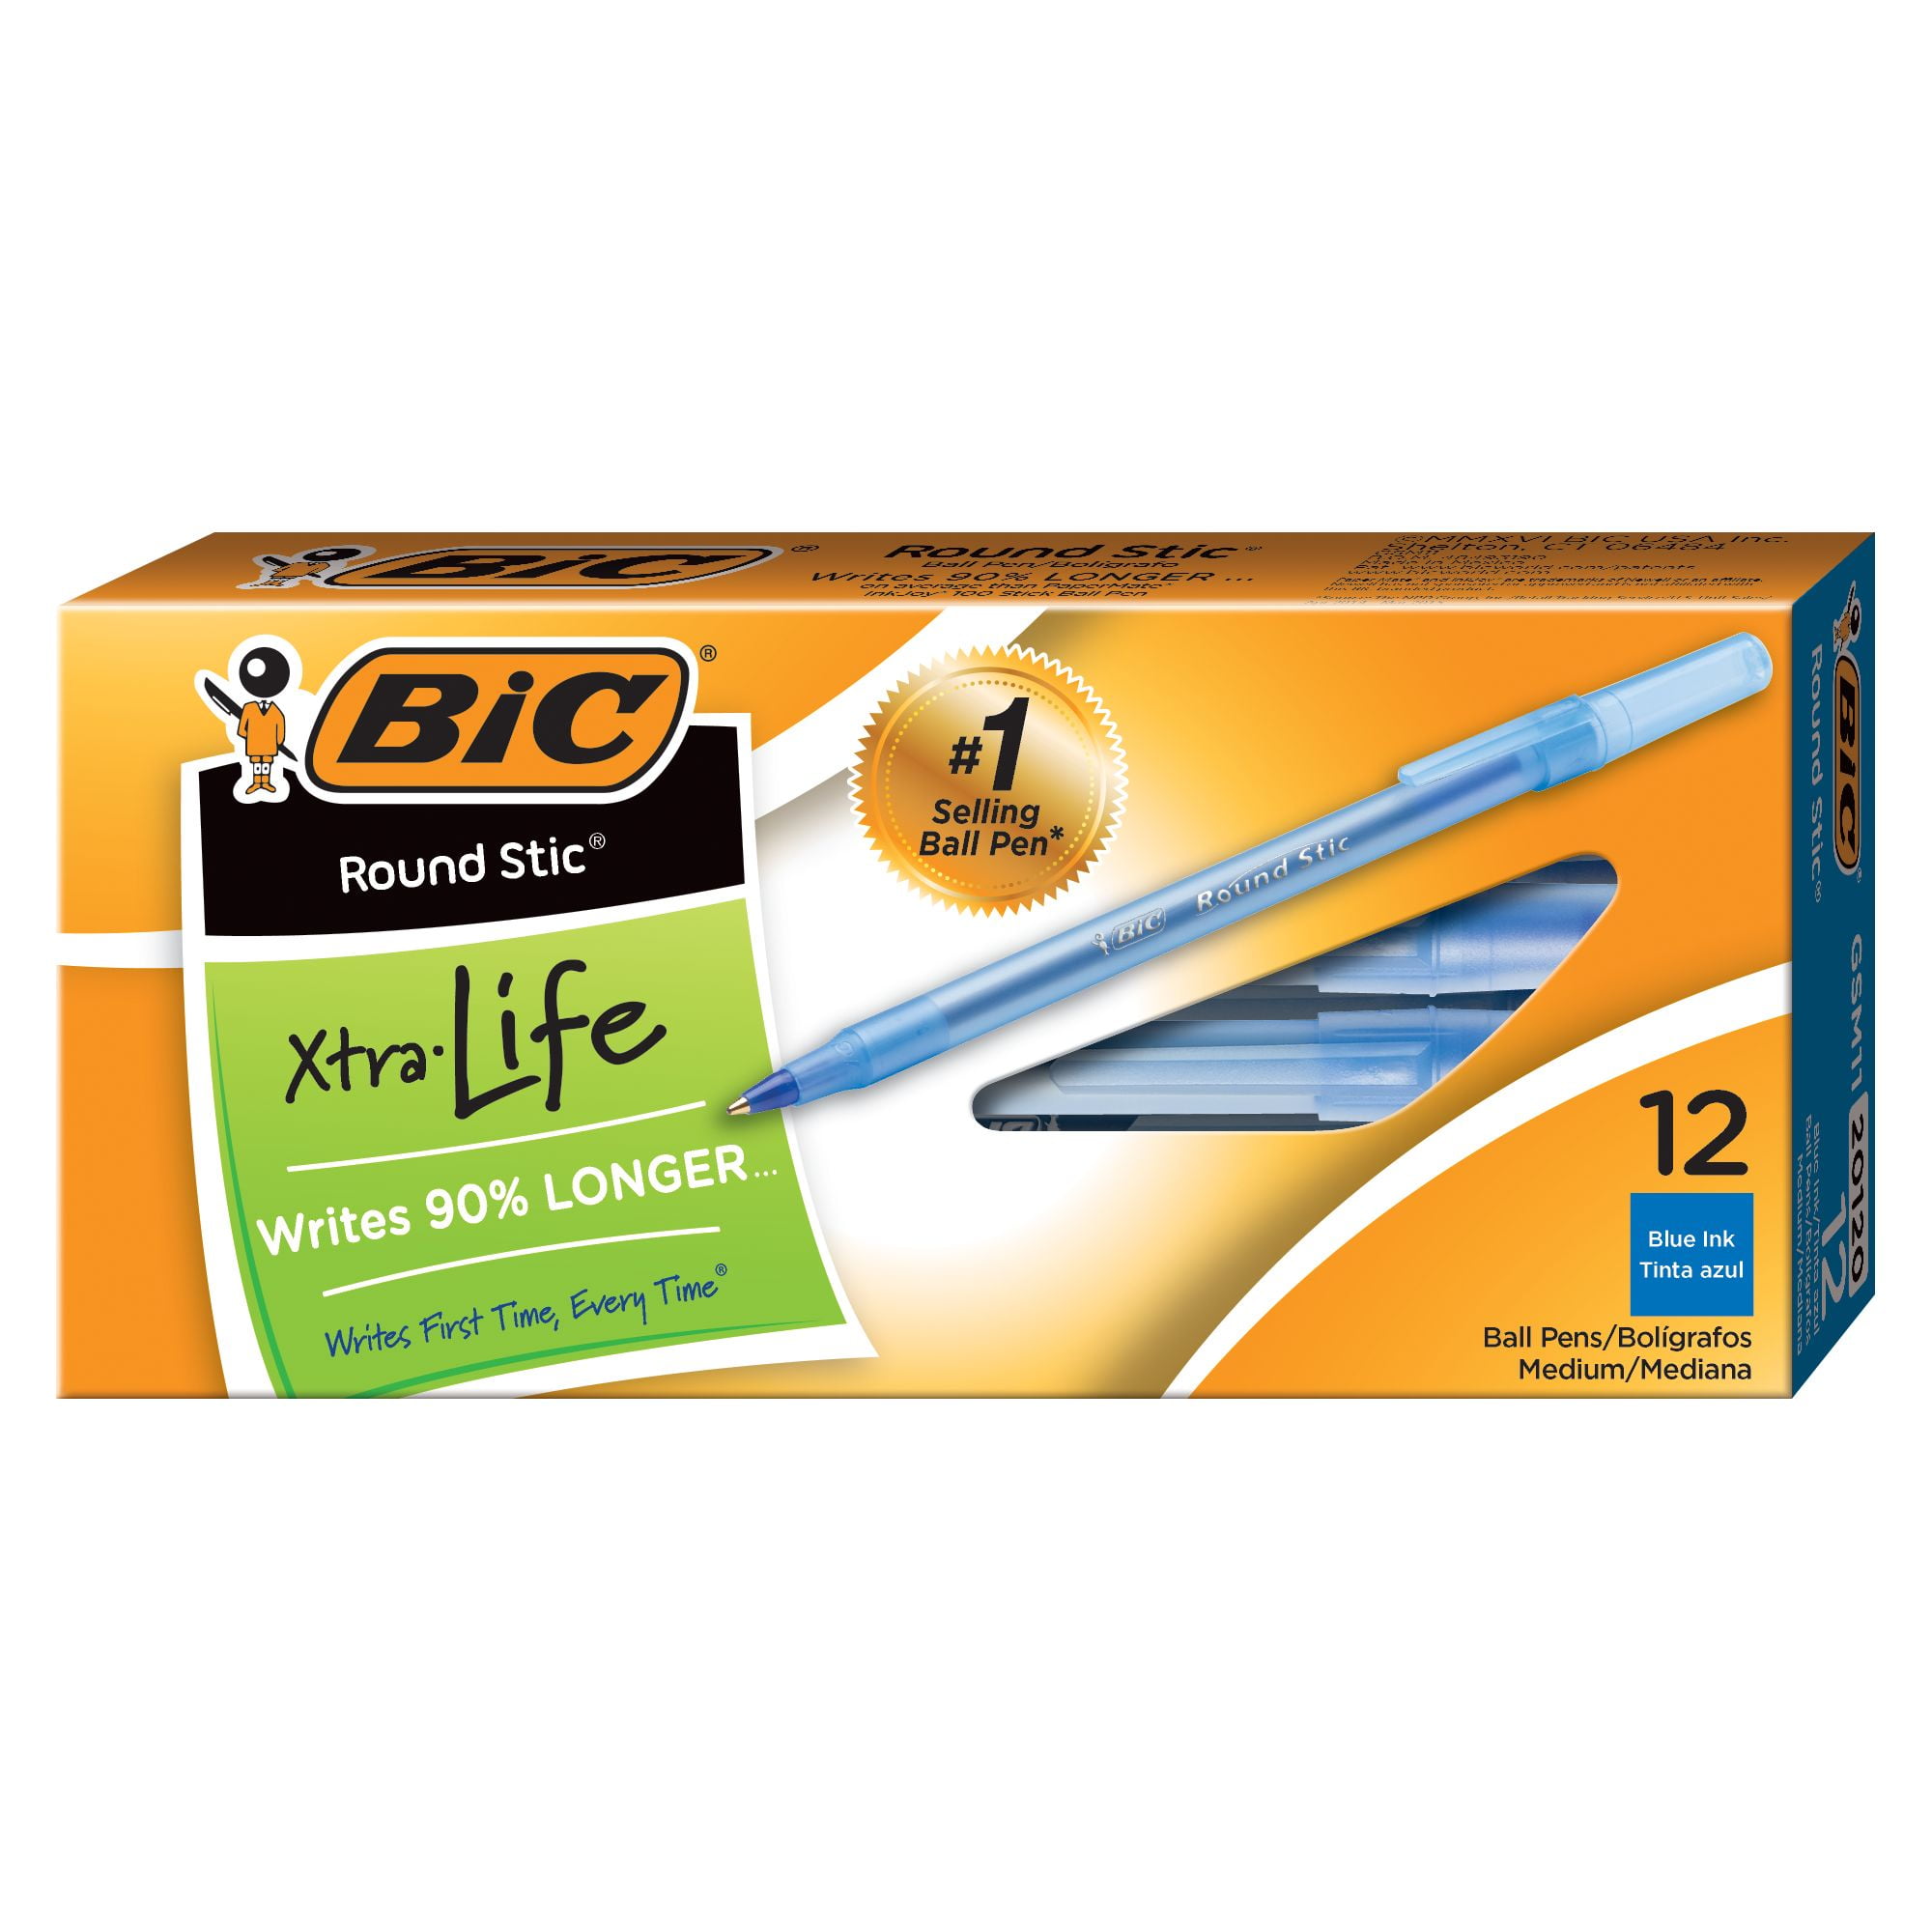 BIC Round Stic Xtra Life Ballpoint Pen Medium Point 1.0mm Black 12-Count